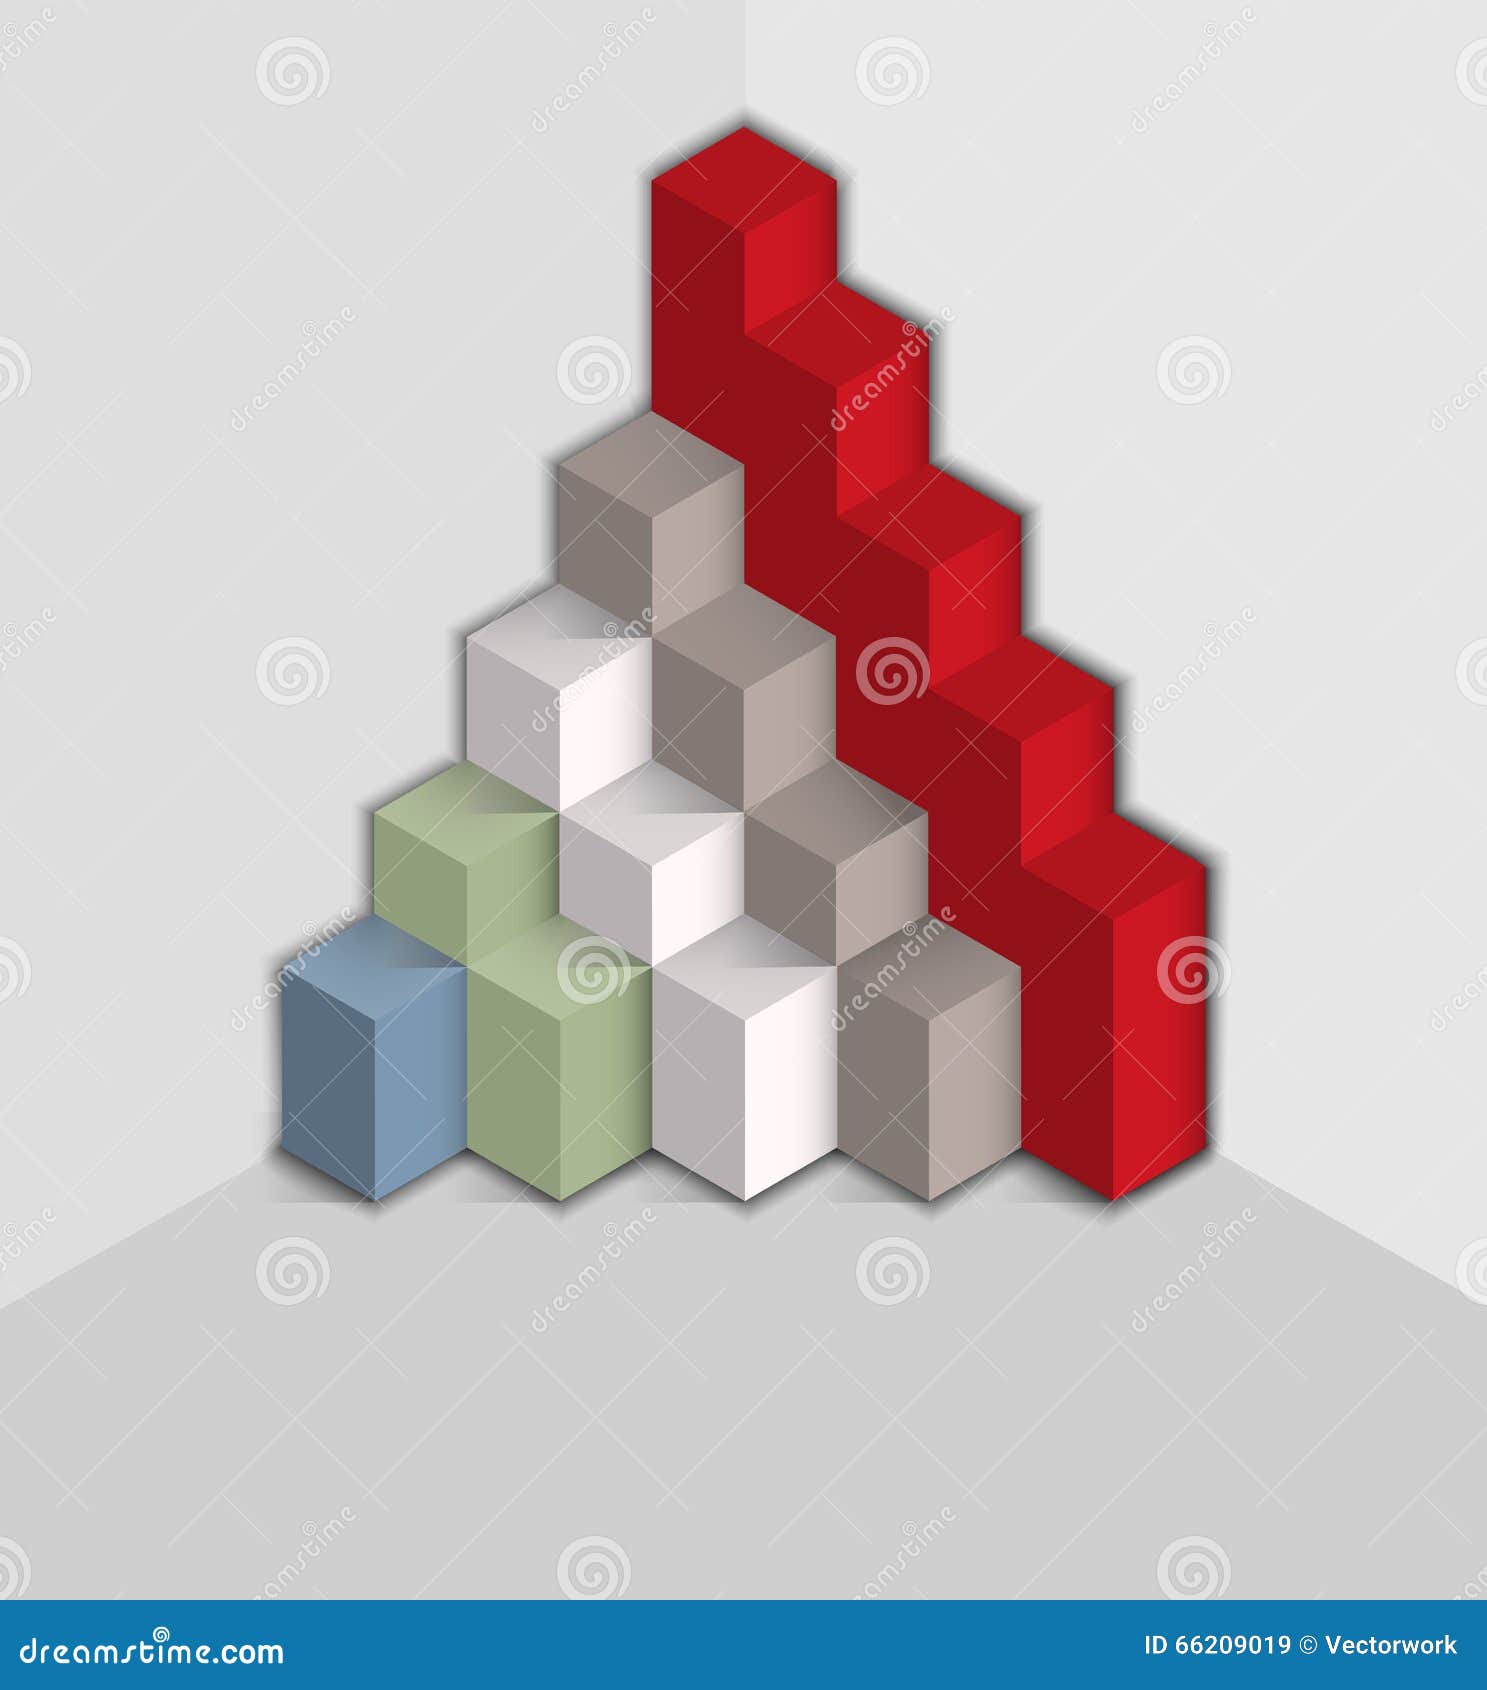 pyramid data to demonstrate indicators